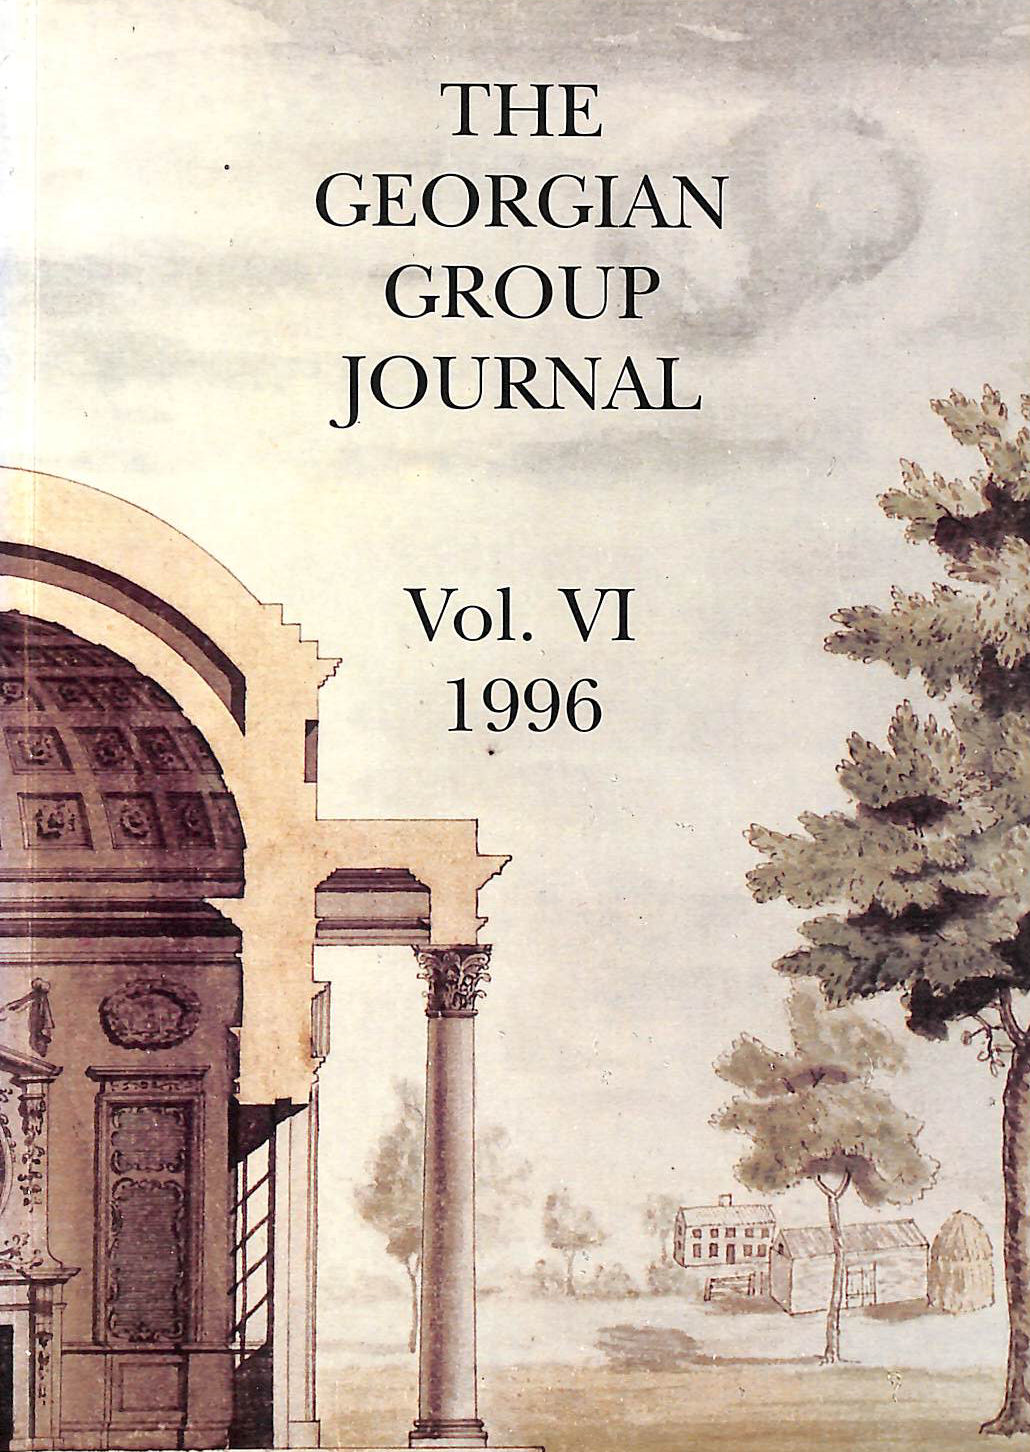 HEWLINGS, RICHARD. EDITOR. - THE GEORGIAN GROUP JOURNAL VOL. VI 1996.